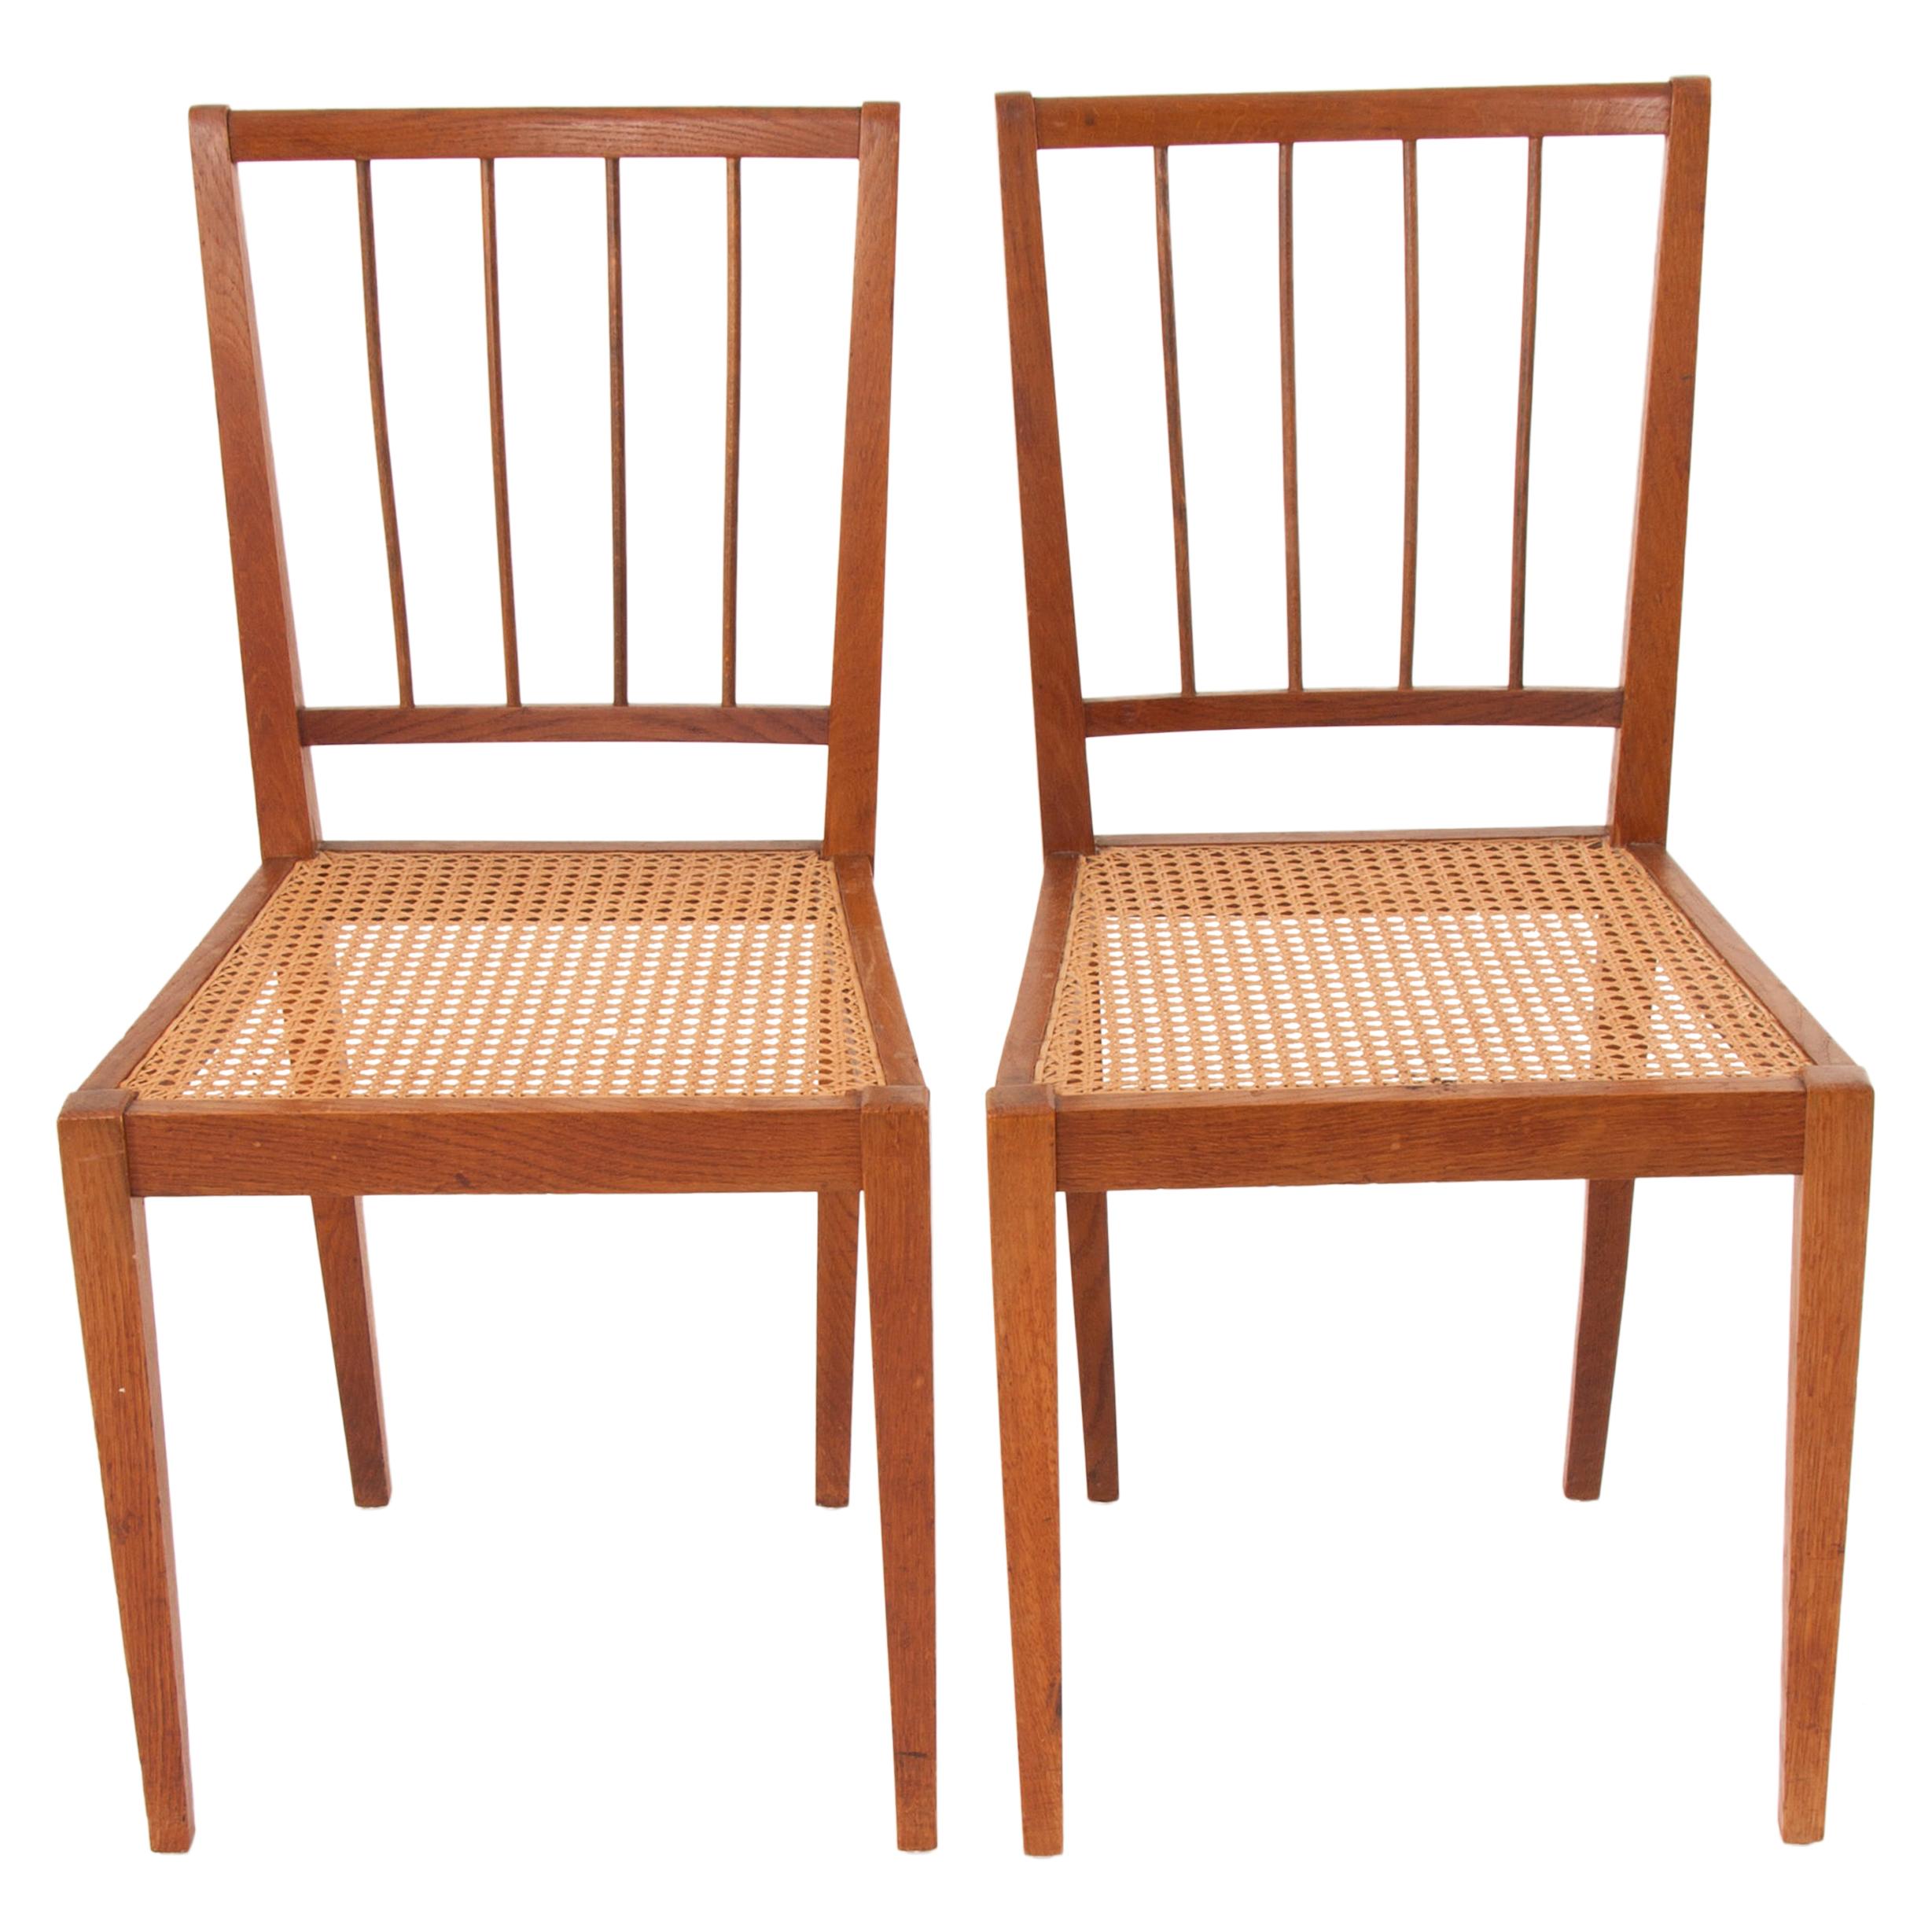 Two Elegant Werkstätte Hagenauer Chairs M006 by Julius Jirasek, Austria, 1930